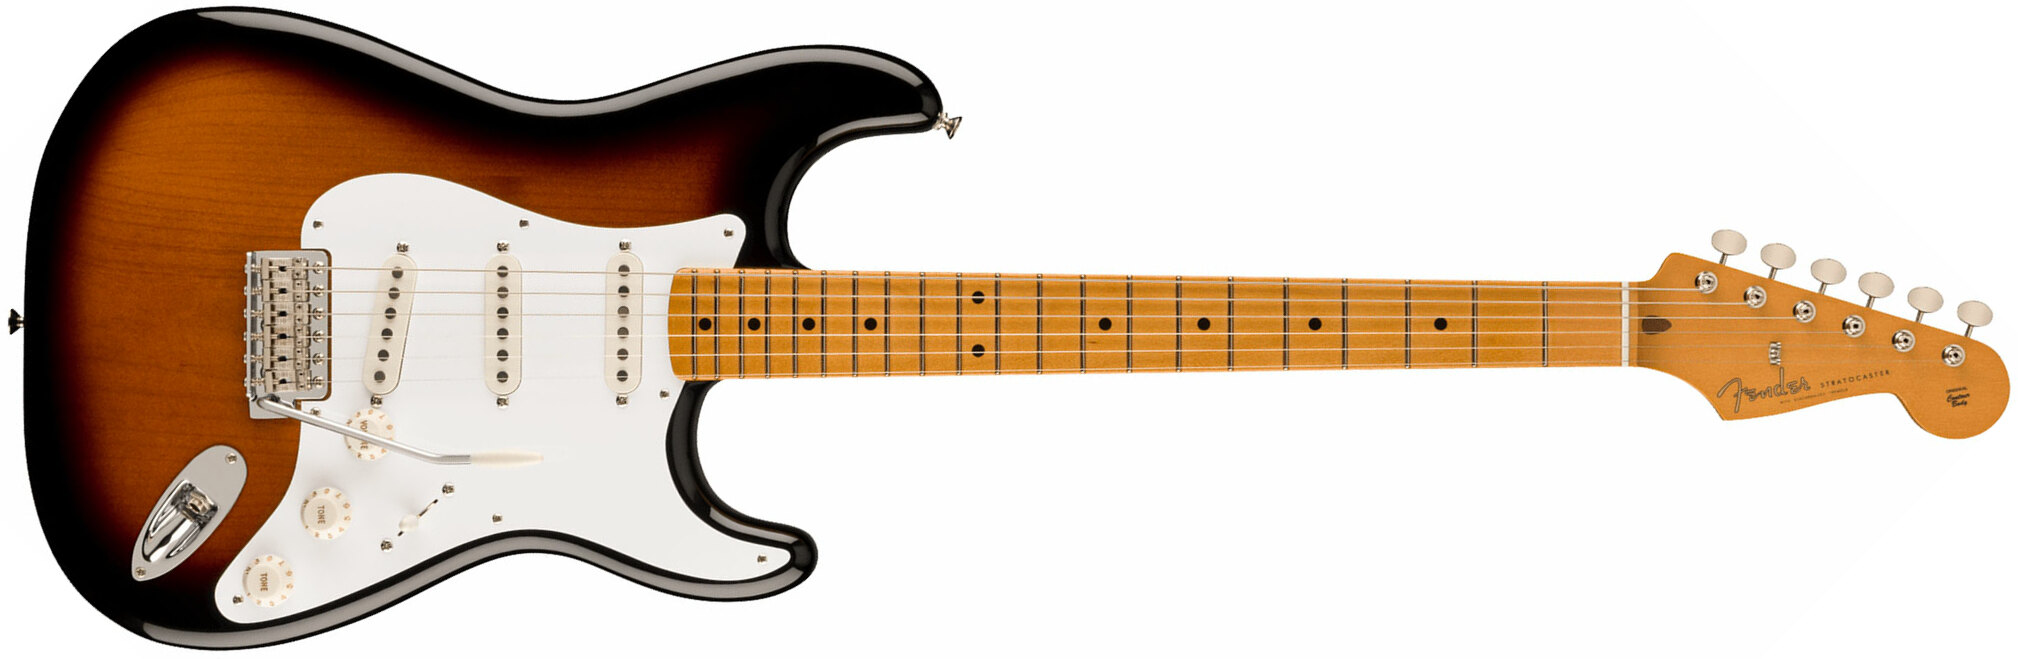 Fender Strat 50s Vintera 2 Mex 3s Trem Mn - 2-color Sunburst - E-Gitarre in Str-Form - Main picture